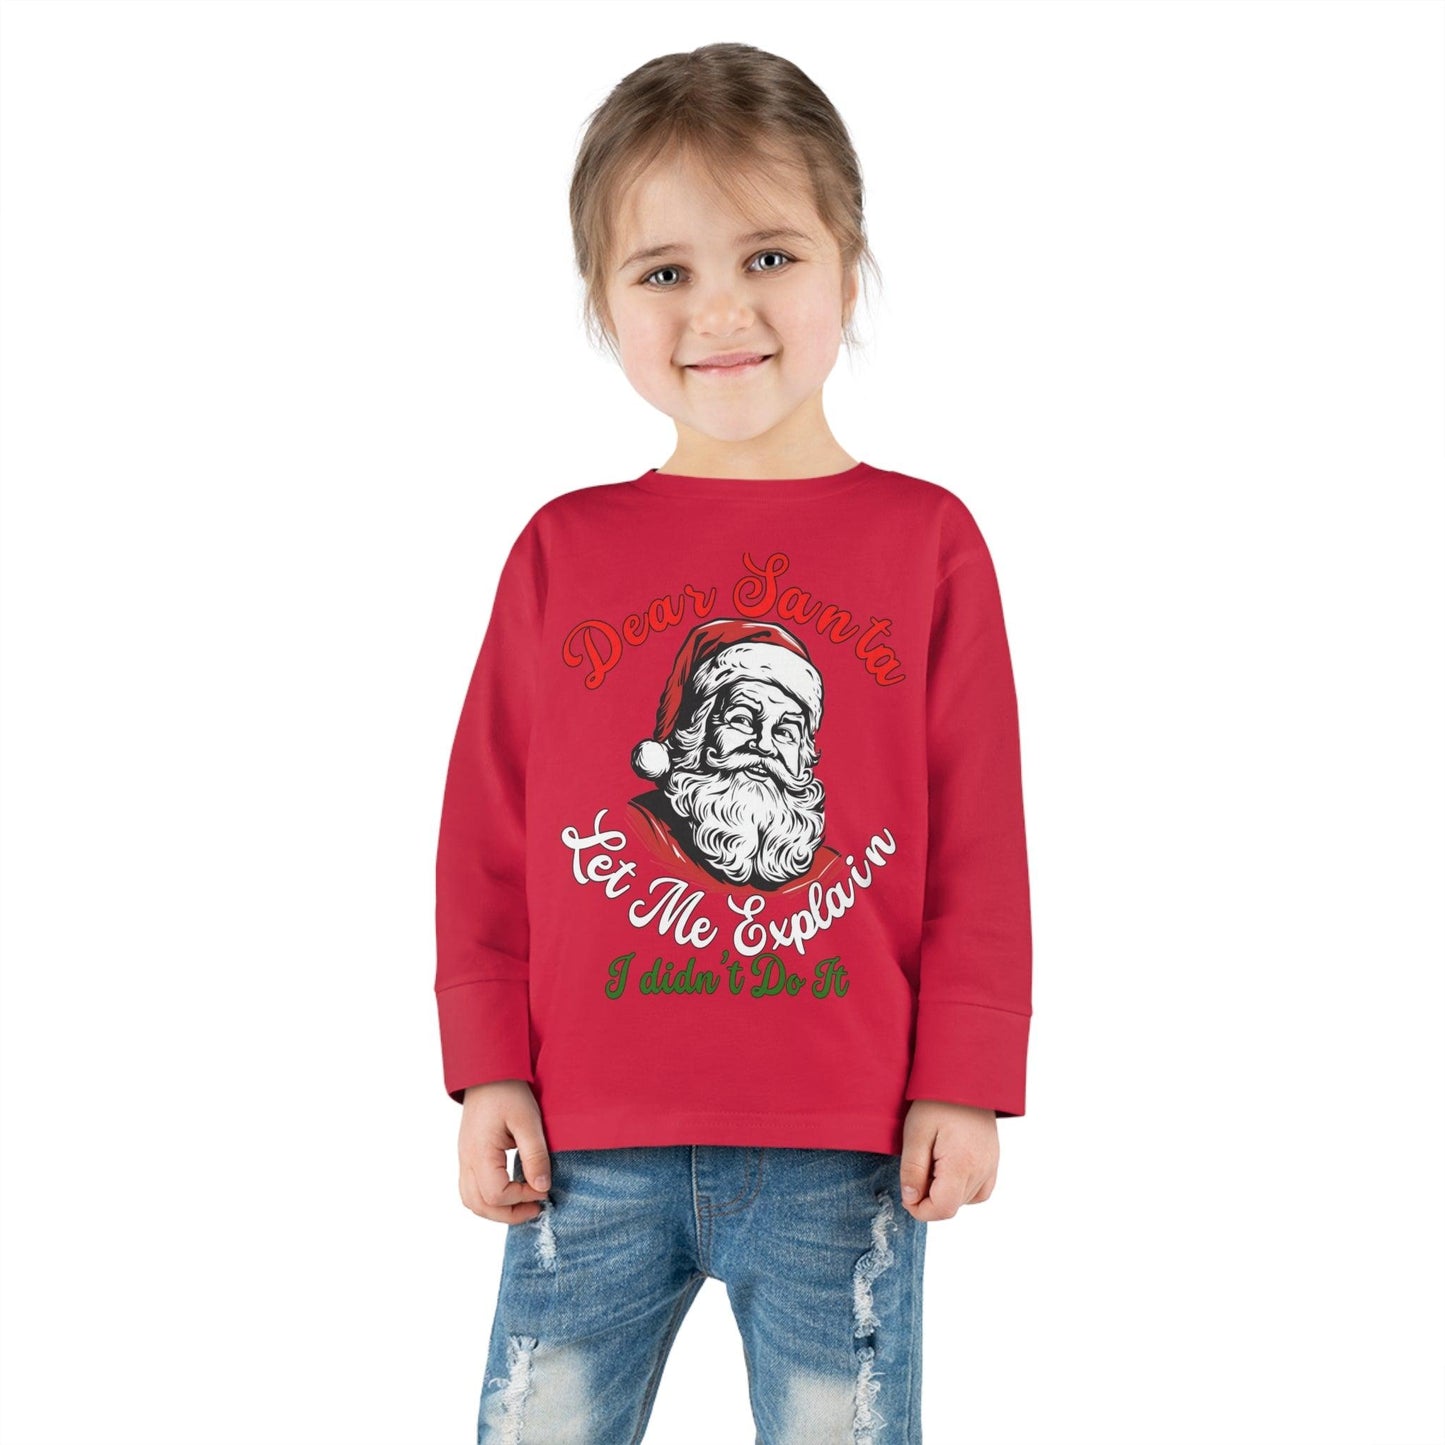 Christmas Shirt for Kids Christmas Outfit for Kids Dear Santa Let Me Explain I Didn't Do It Shirt - Giftsmojo